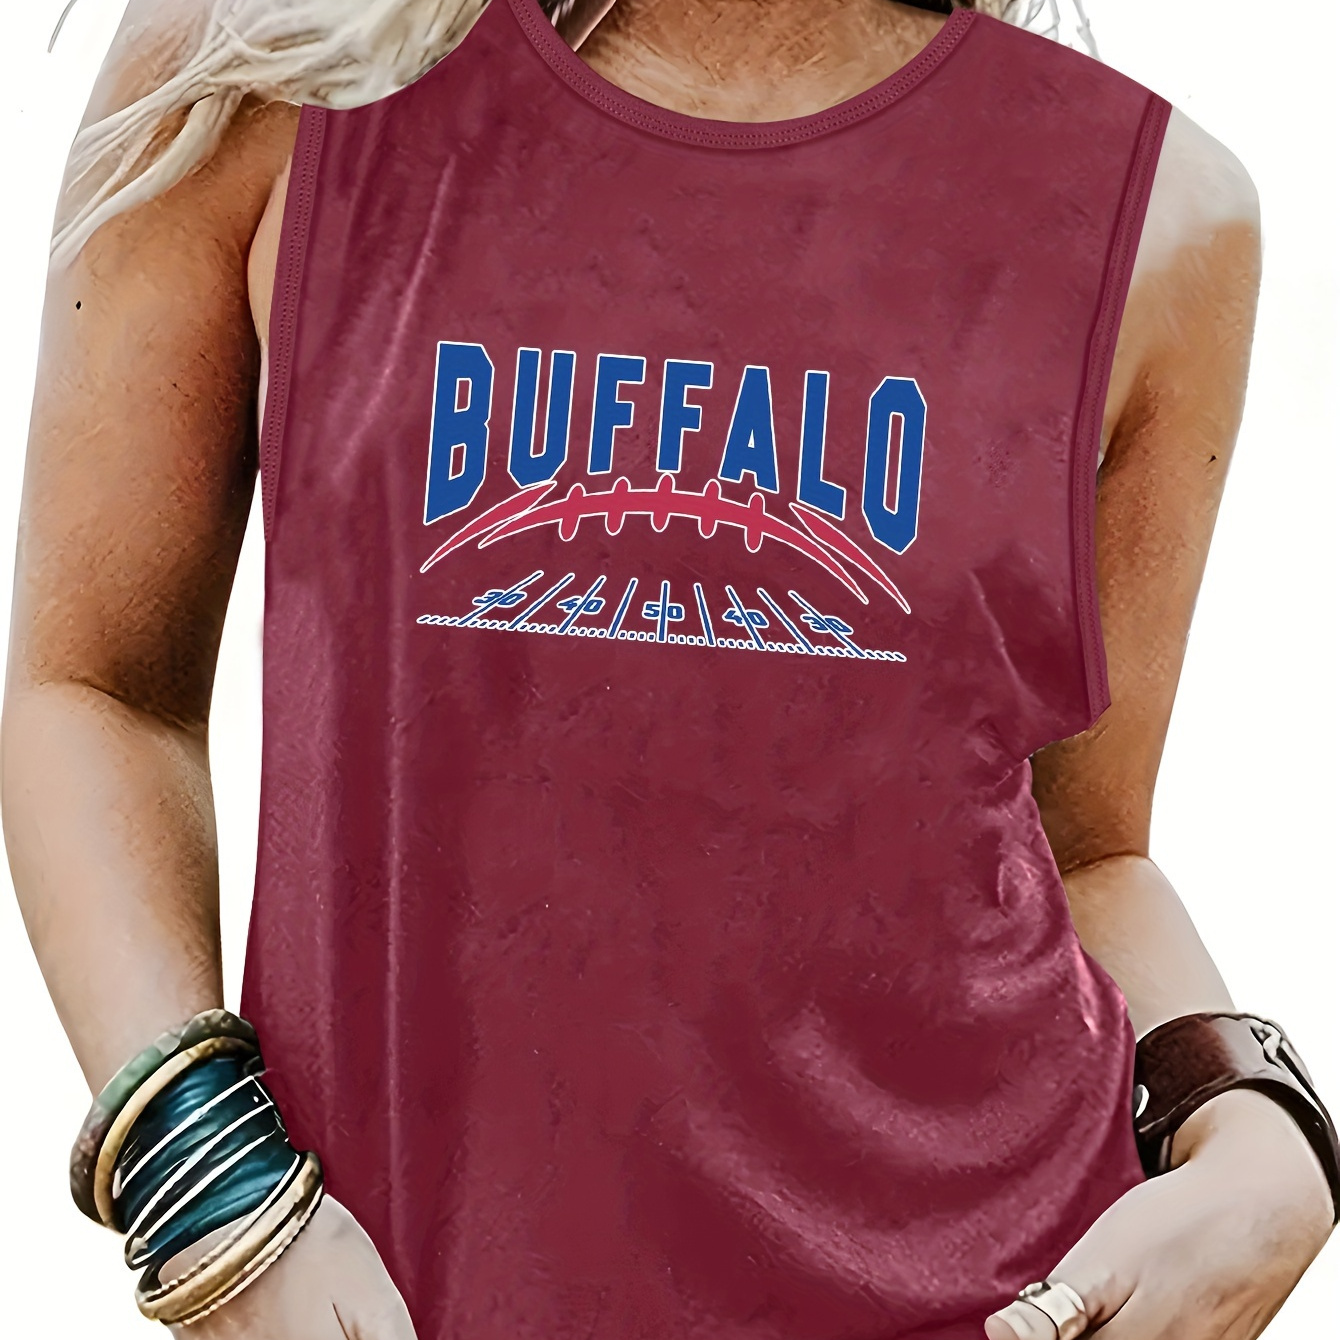 

Buffalo Print Crew Neck Tank Top, Casual Sleeveless Top For Summer & Spring, Women's Clothing